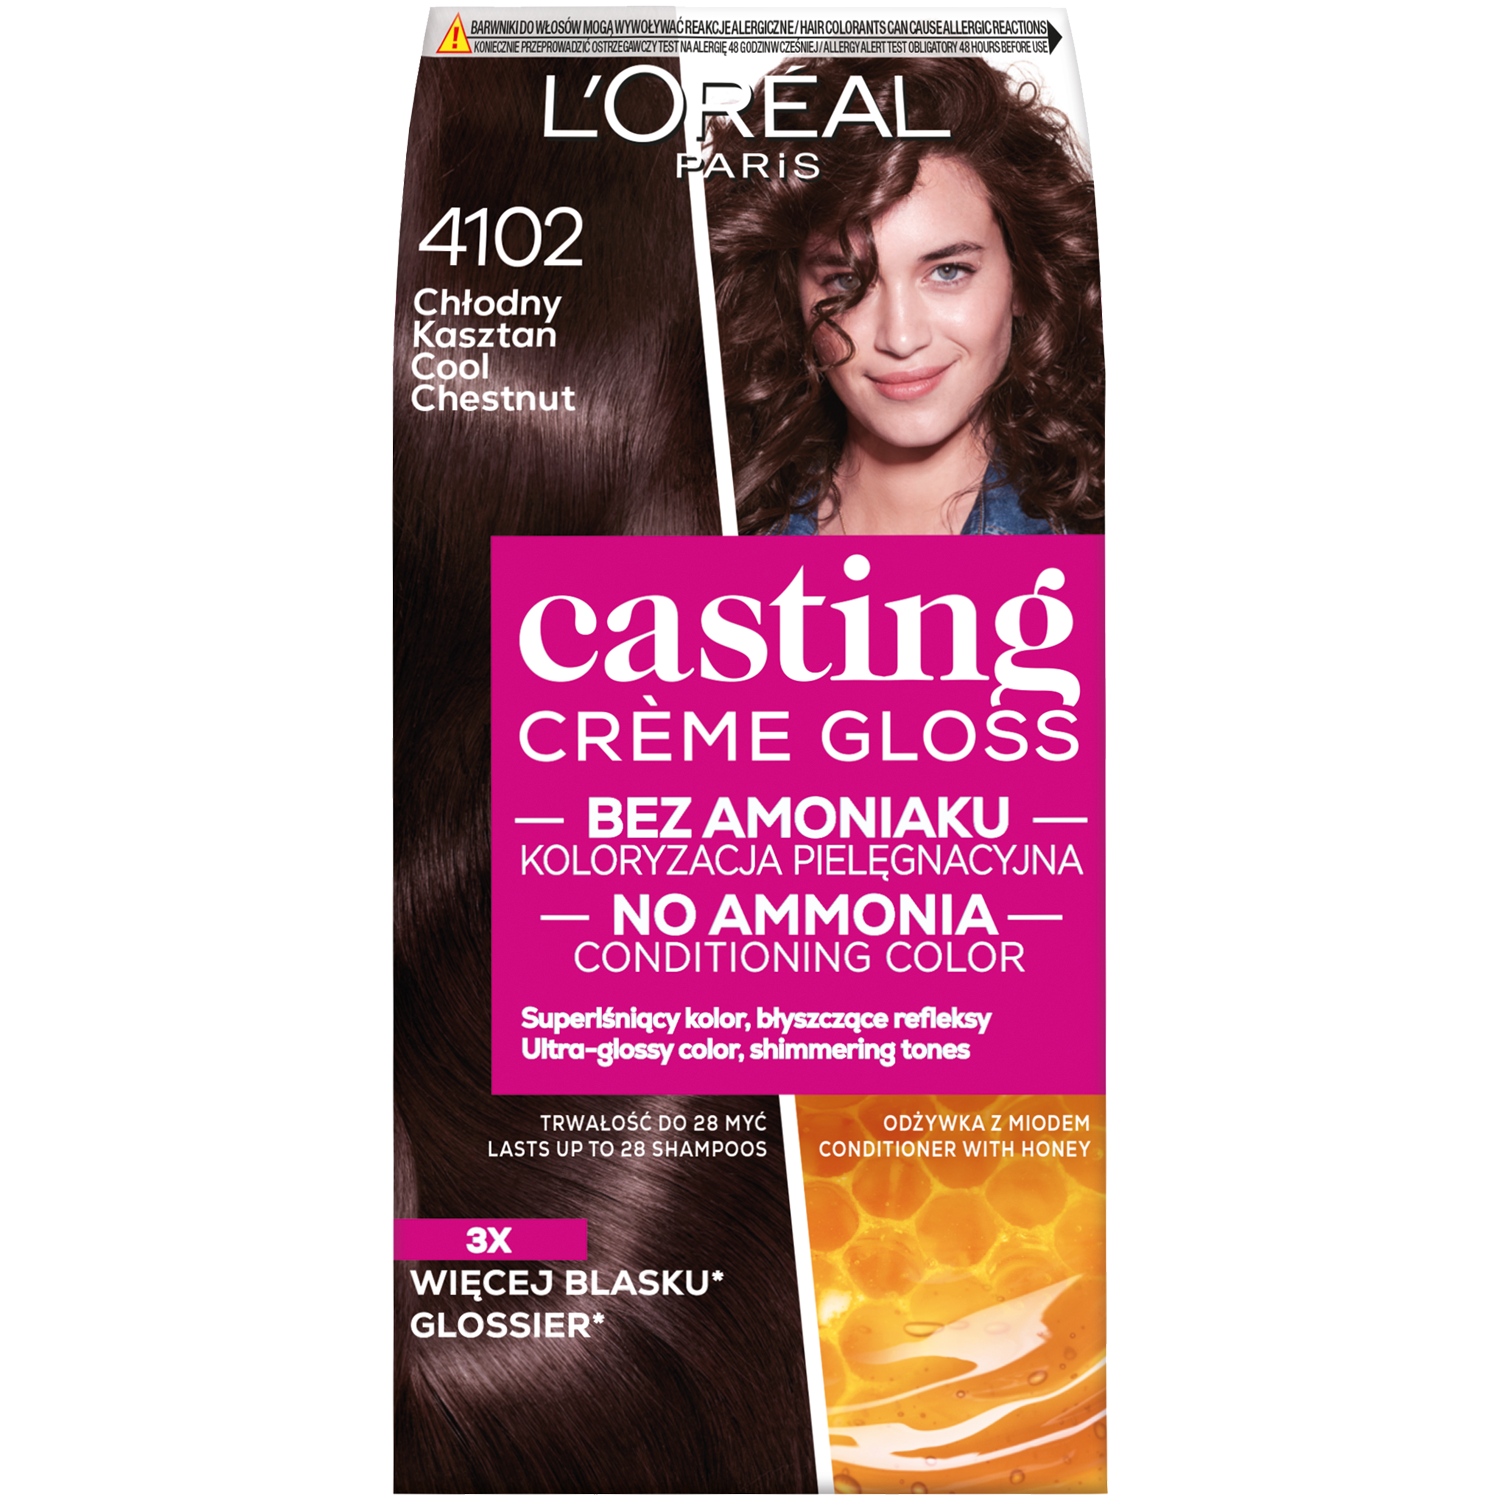 L'Oréal Paris Casting Creme Gloss краска для волос 4102 холодный каштан, 1 упаковка краска для волос холодный каштан casting creme gloss loreal лореаль 254мл тон 4102